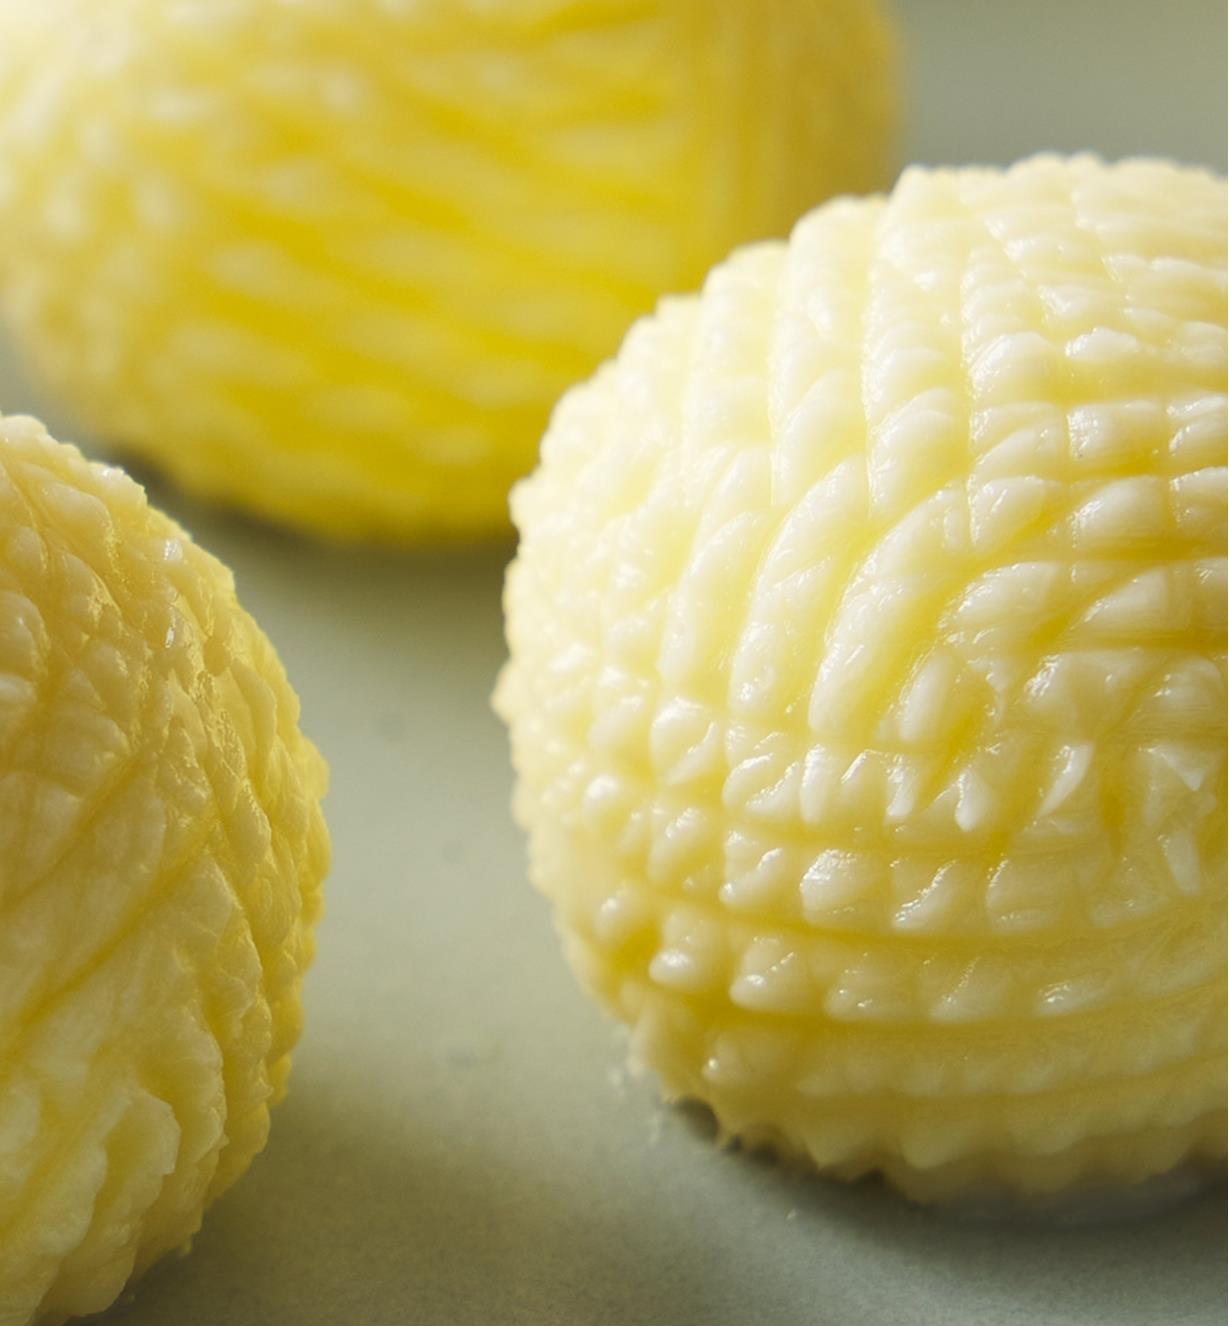 Three decorative, ridged balls of butter.